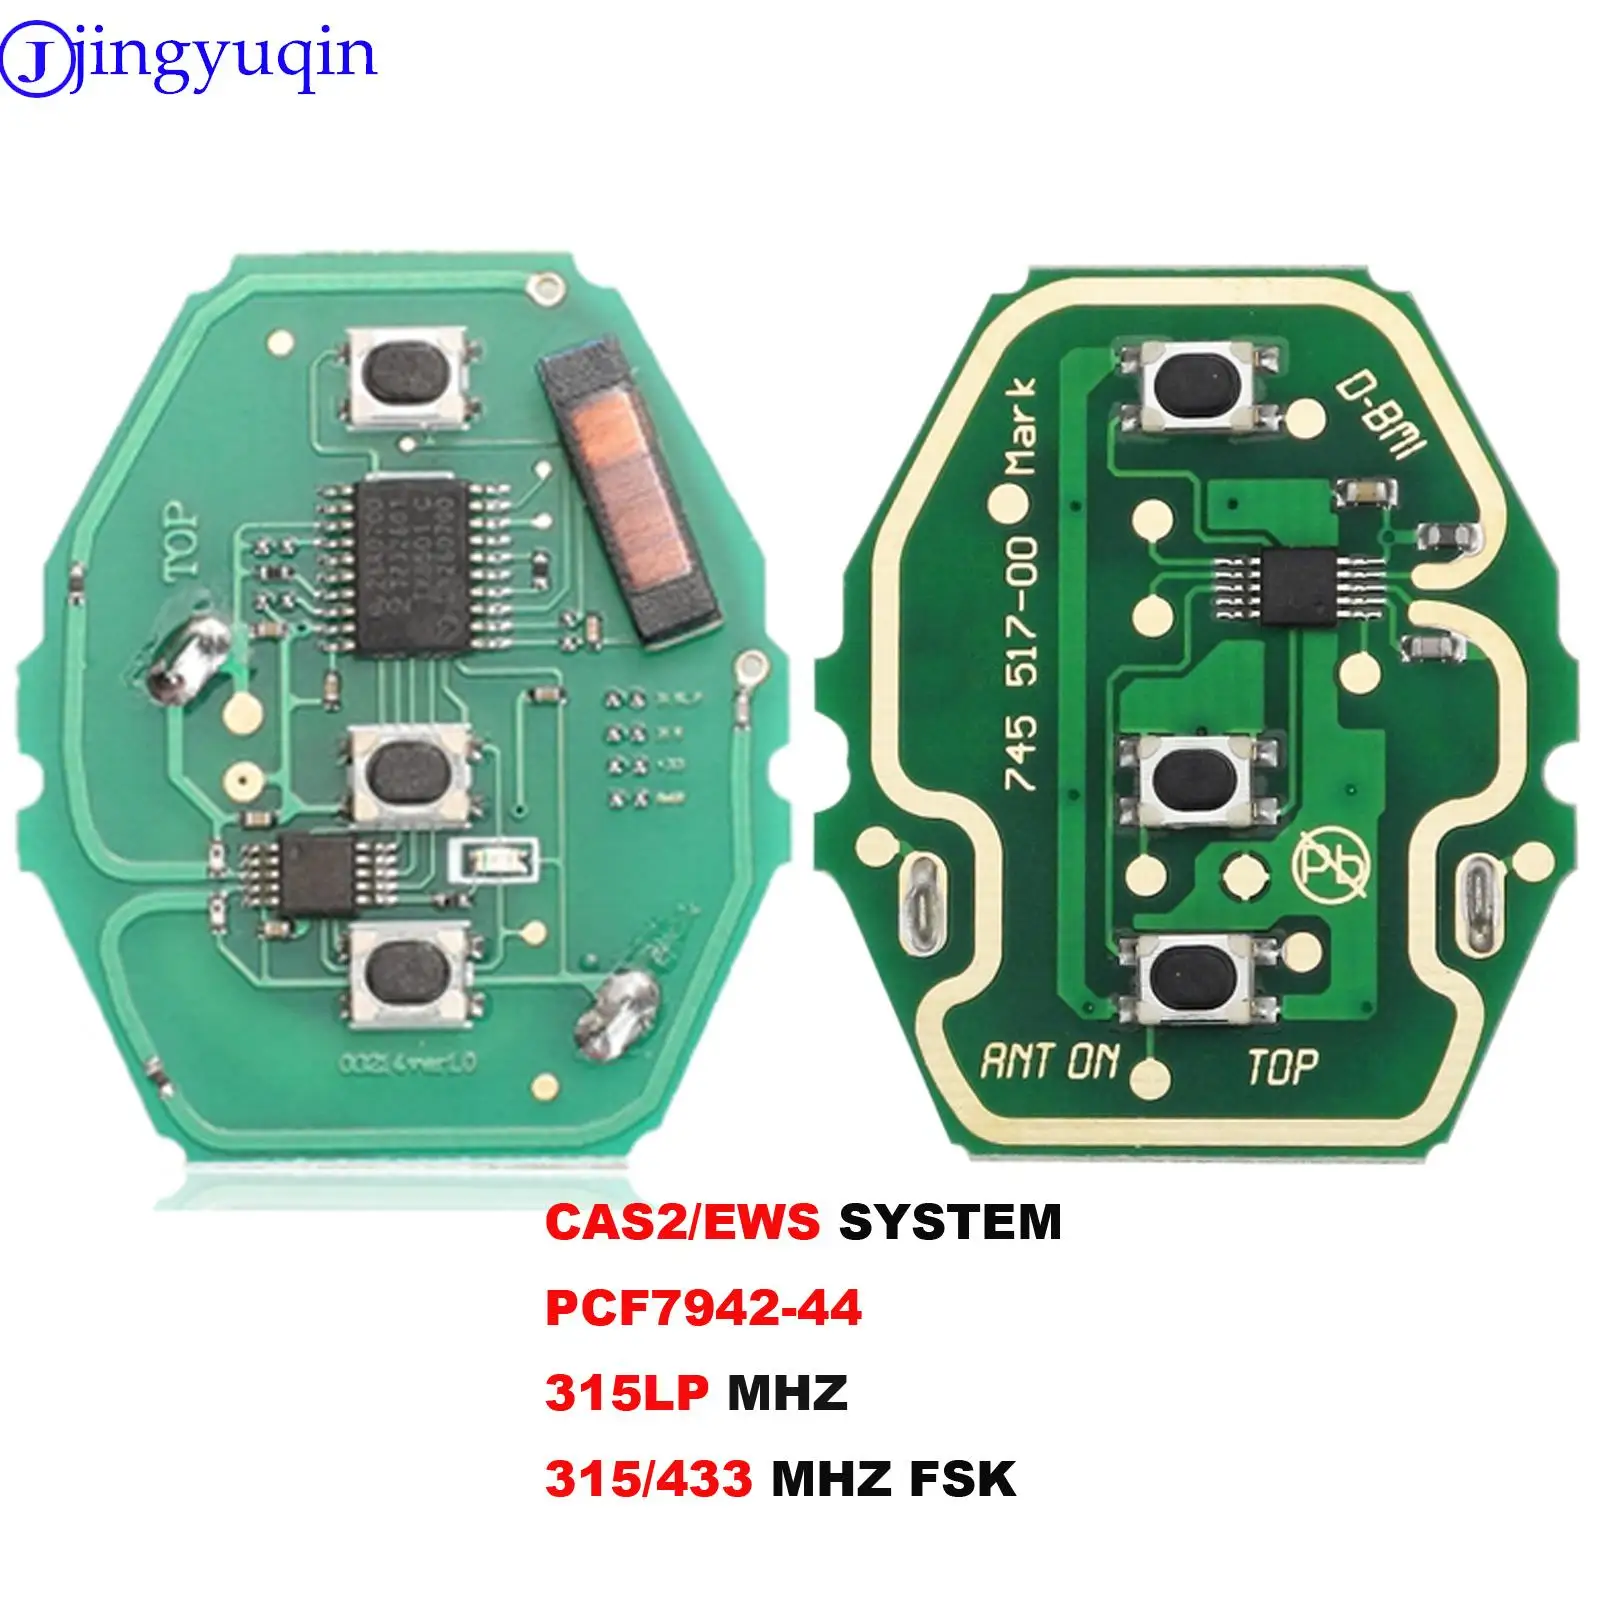 jingyuqin CAS2 System Car Remote Key For BMW 3/5 7 Series 315LP 315/433 Mhz with ID46-7945 Chip HU58 HU92 Blade